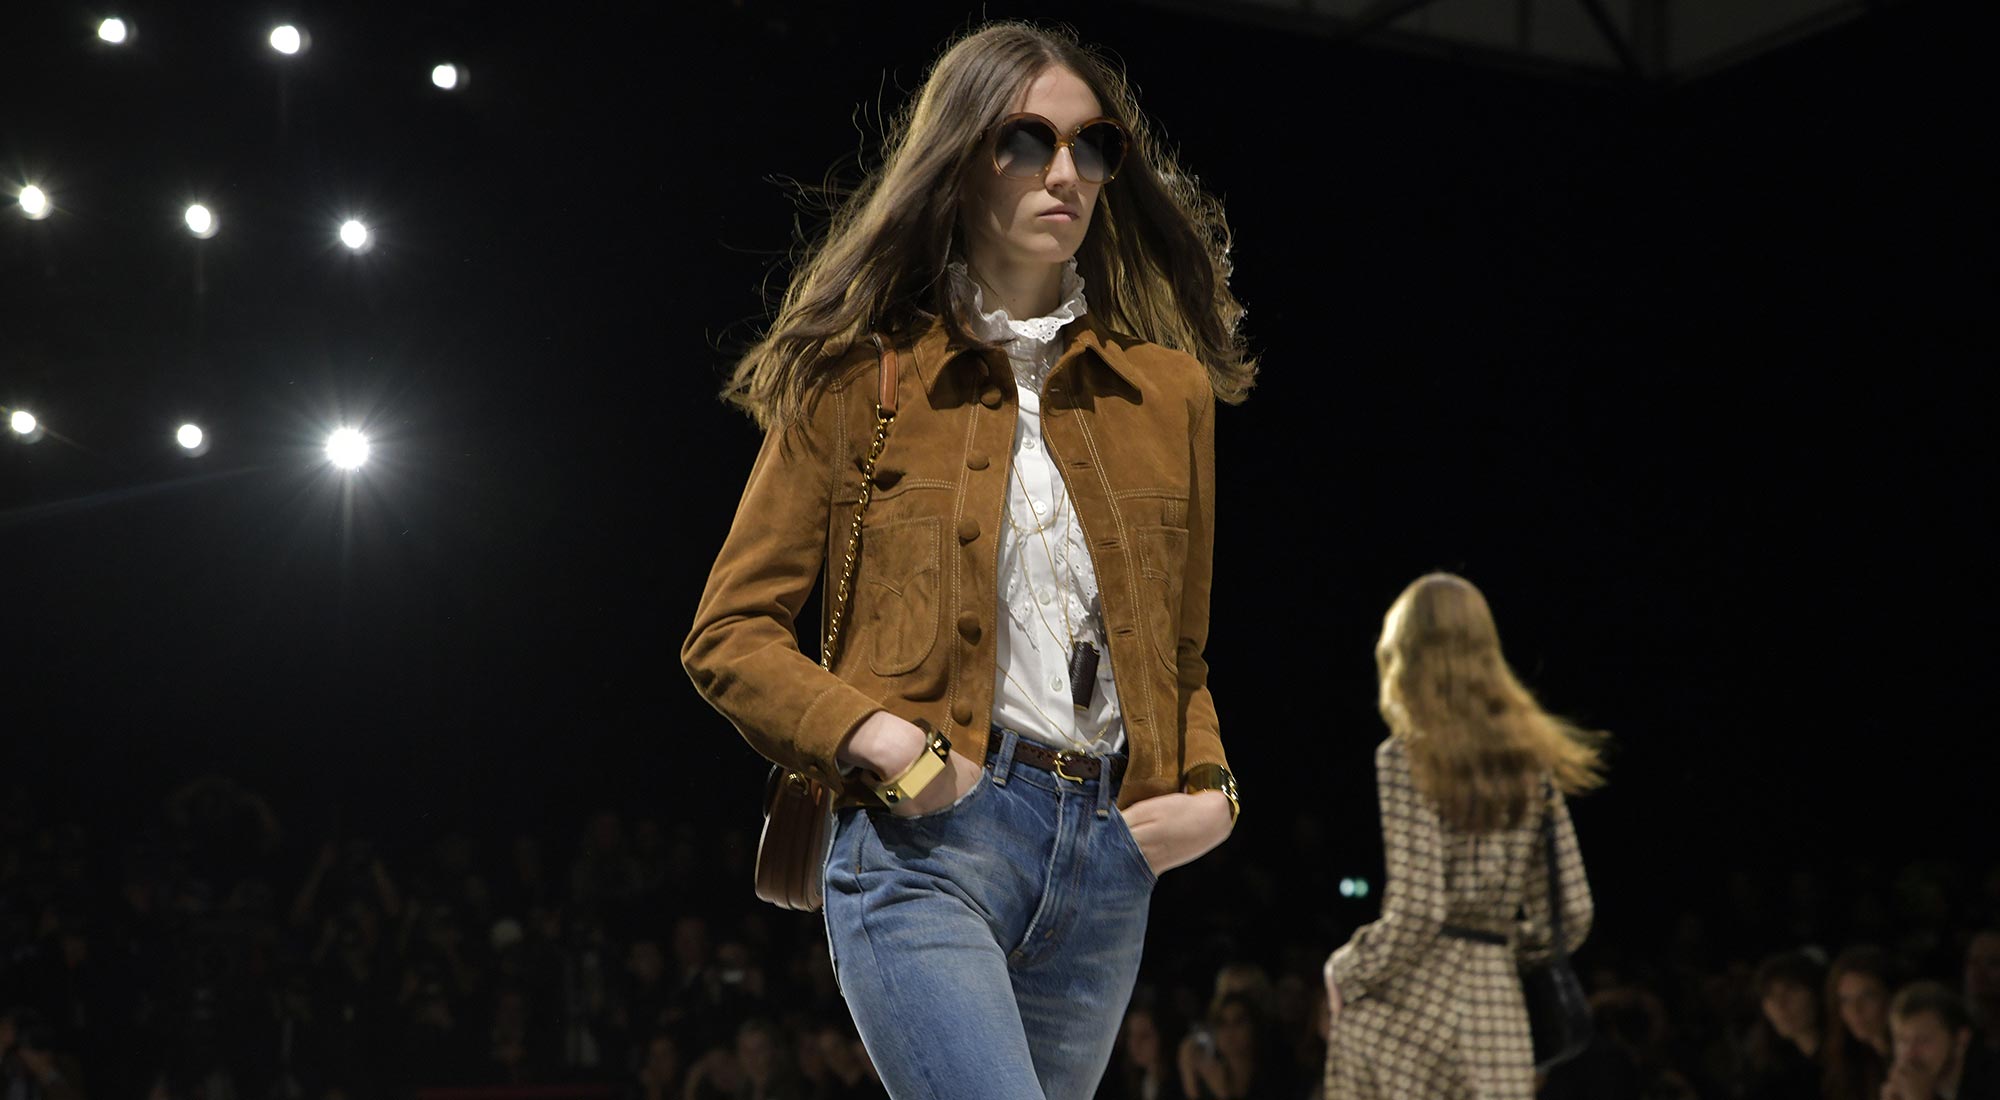 LVMH Maisons reinvent the runway for Paris Fashion Week Women's